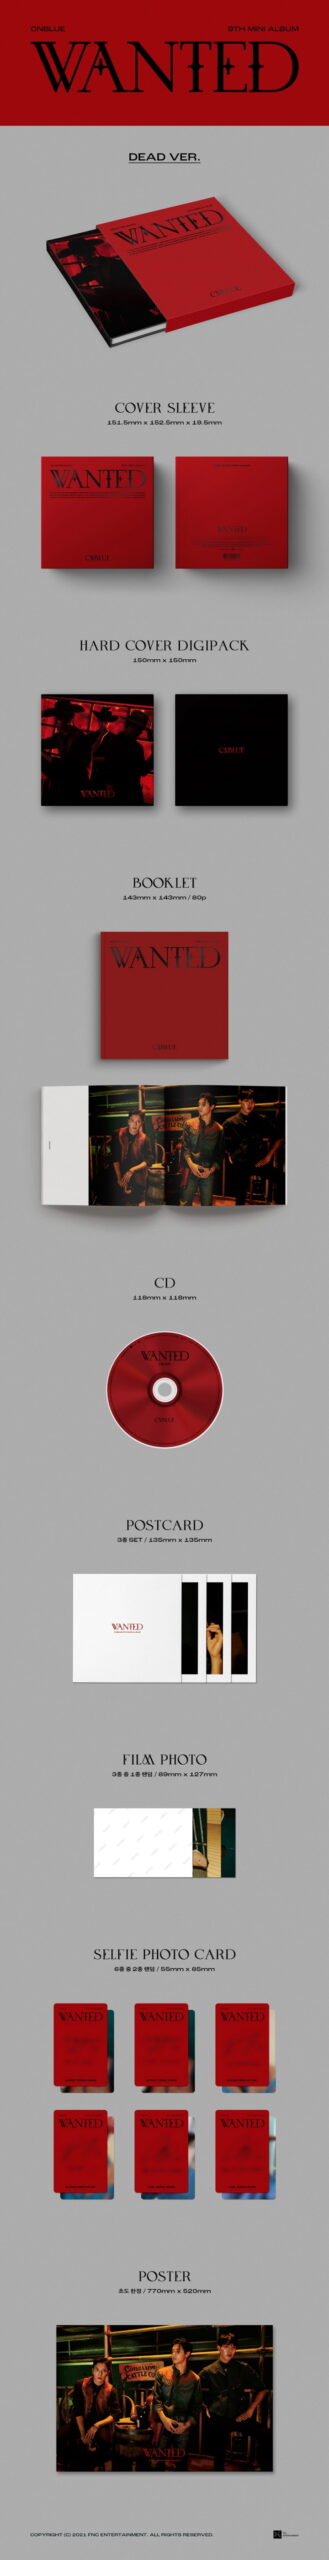 9th Mini Album de CNBLUE WANTED DEAD Ver.